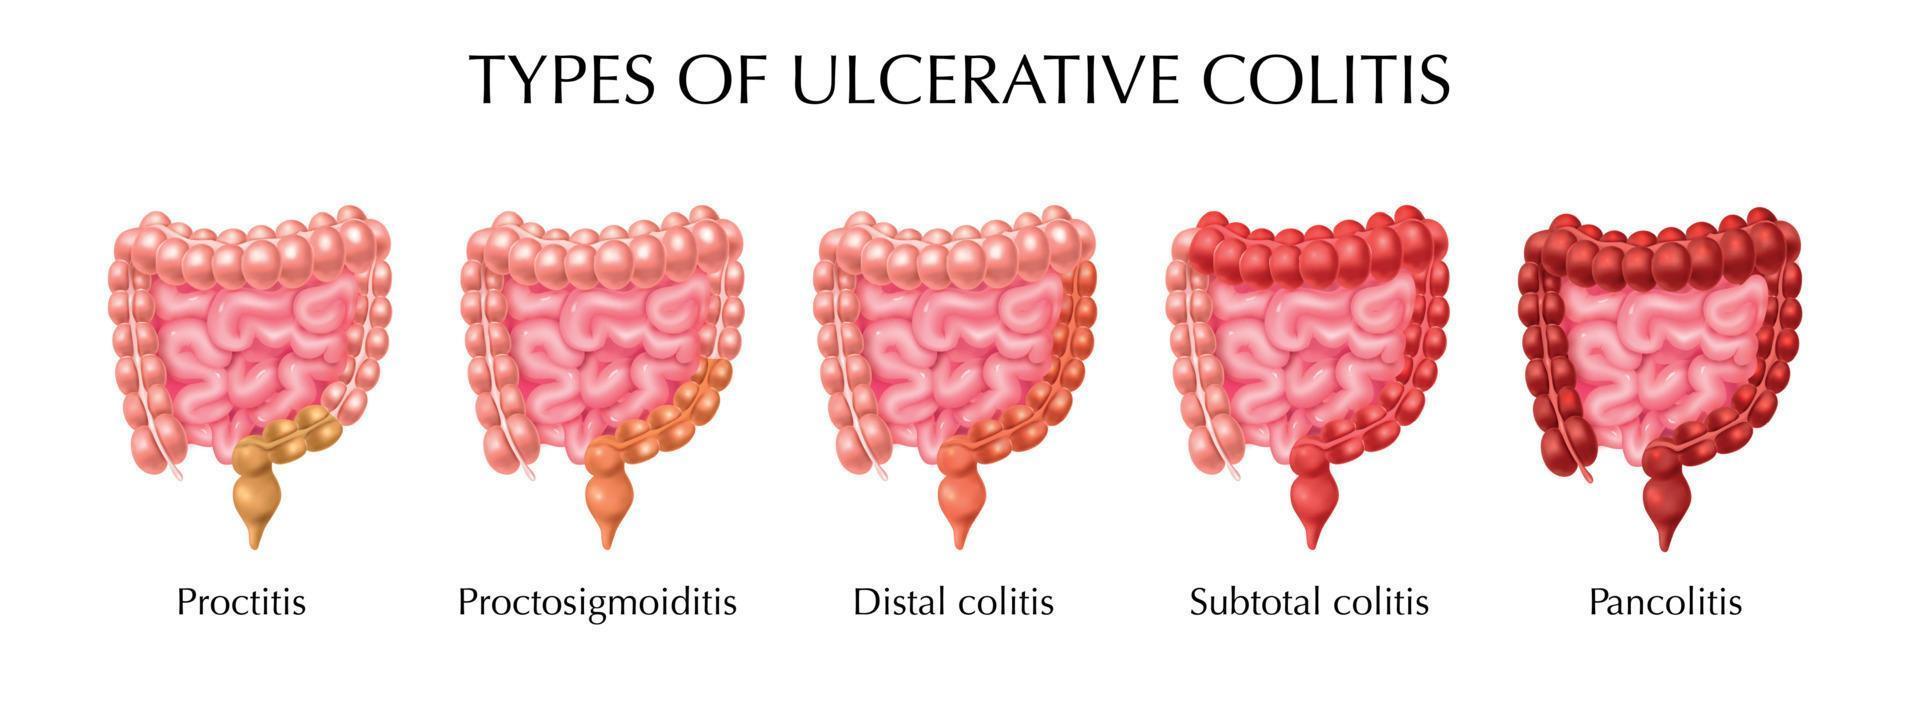 Nutricion colitis ulcerosa